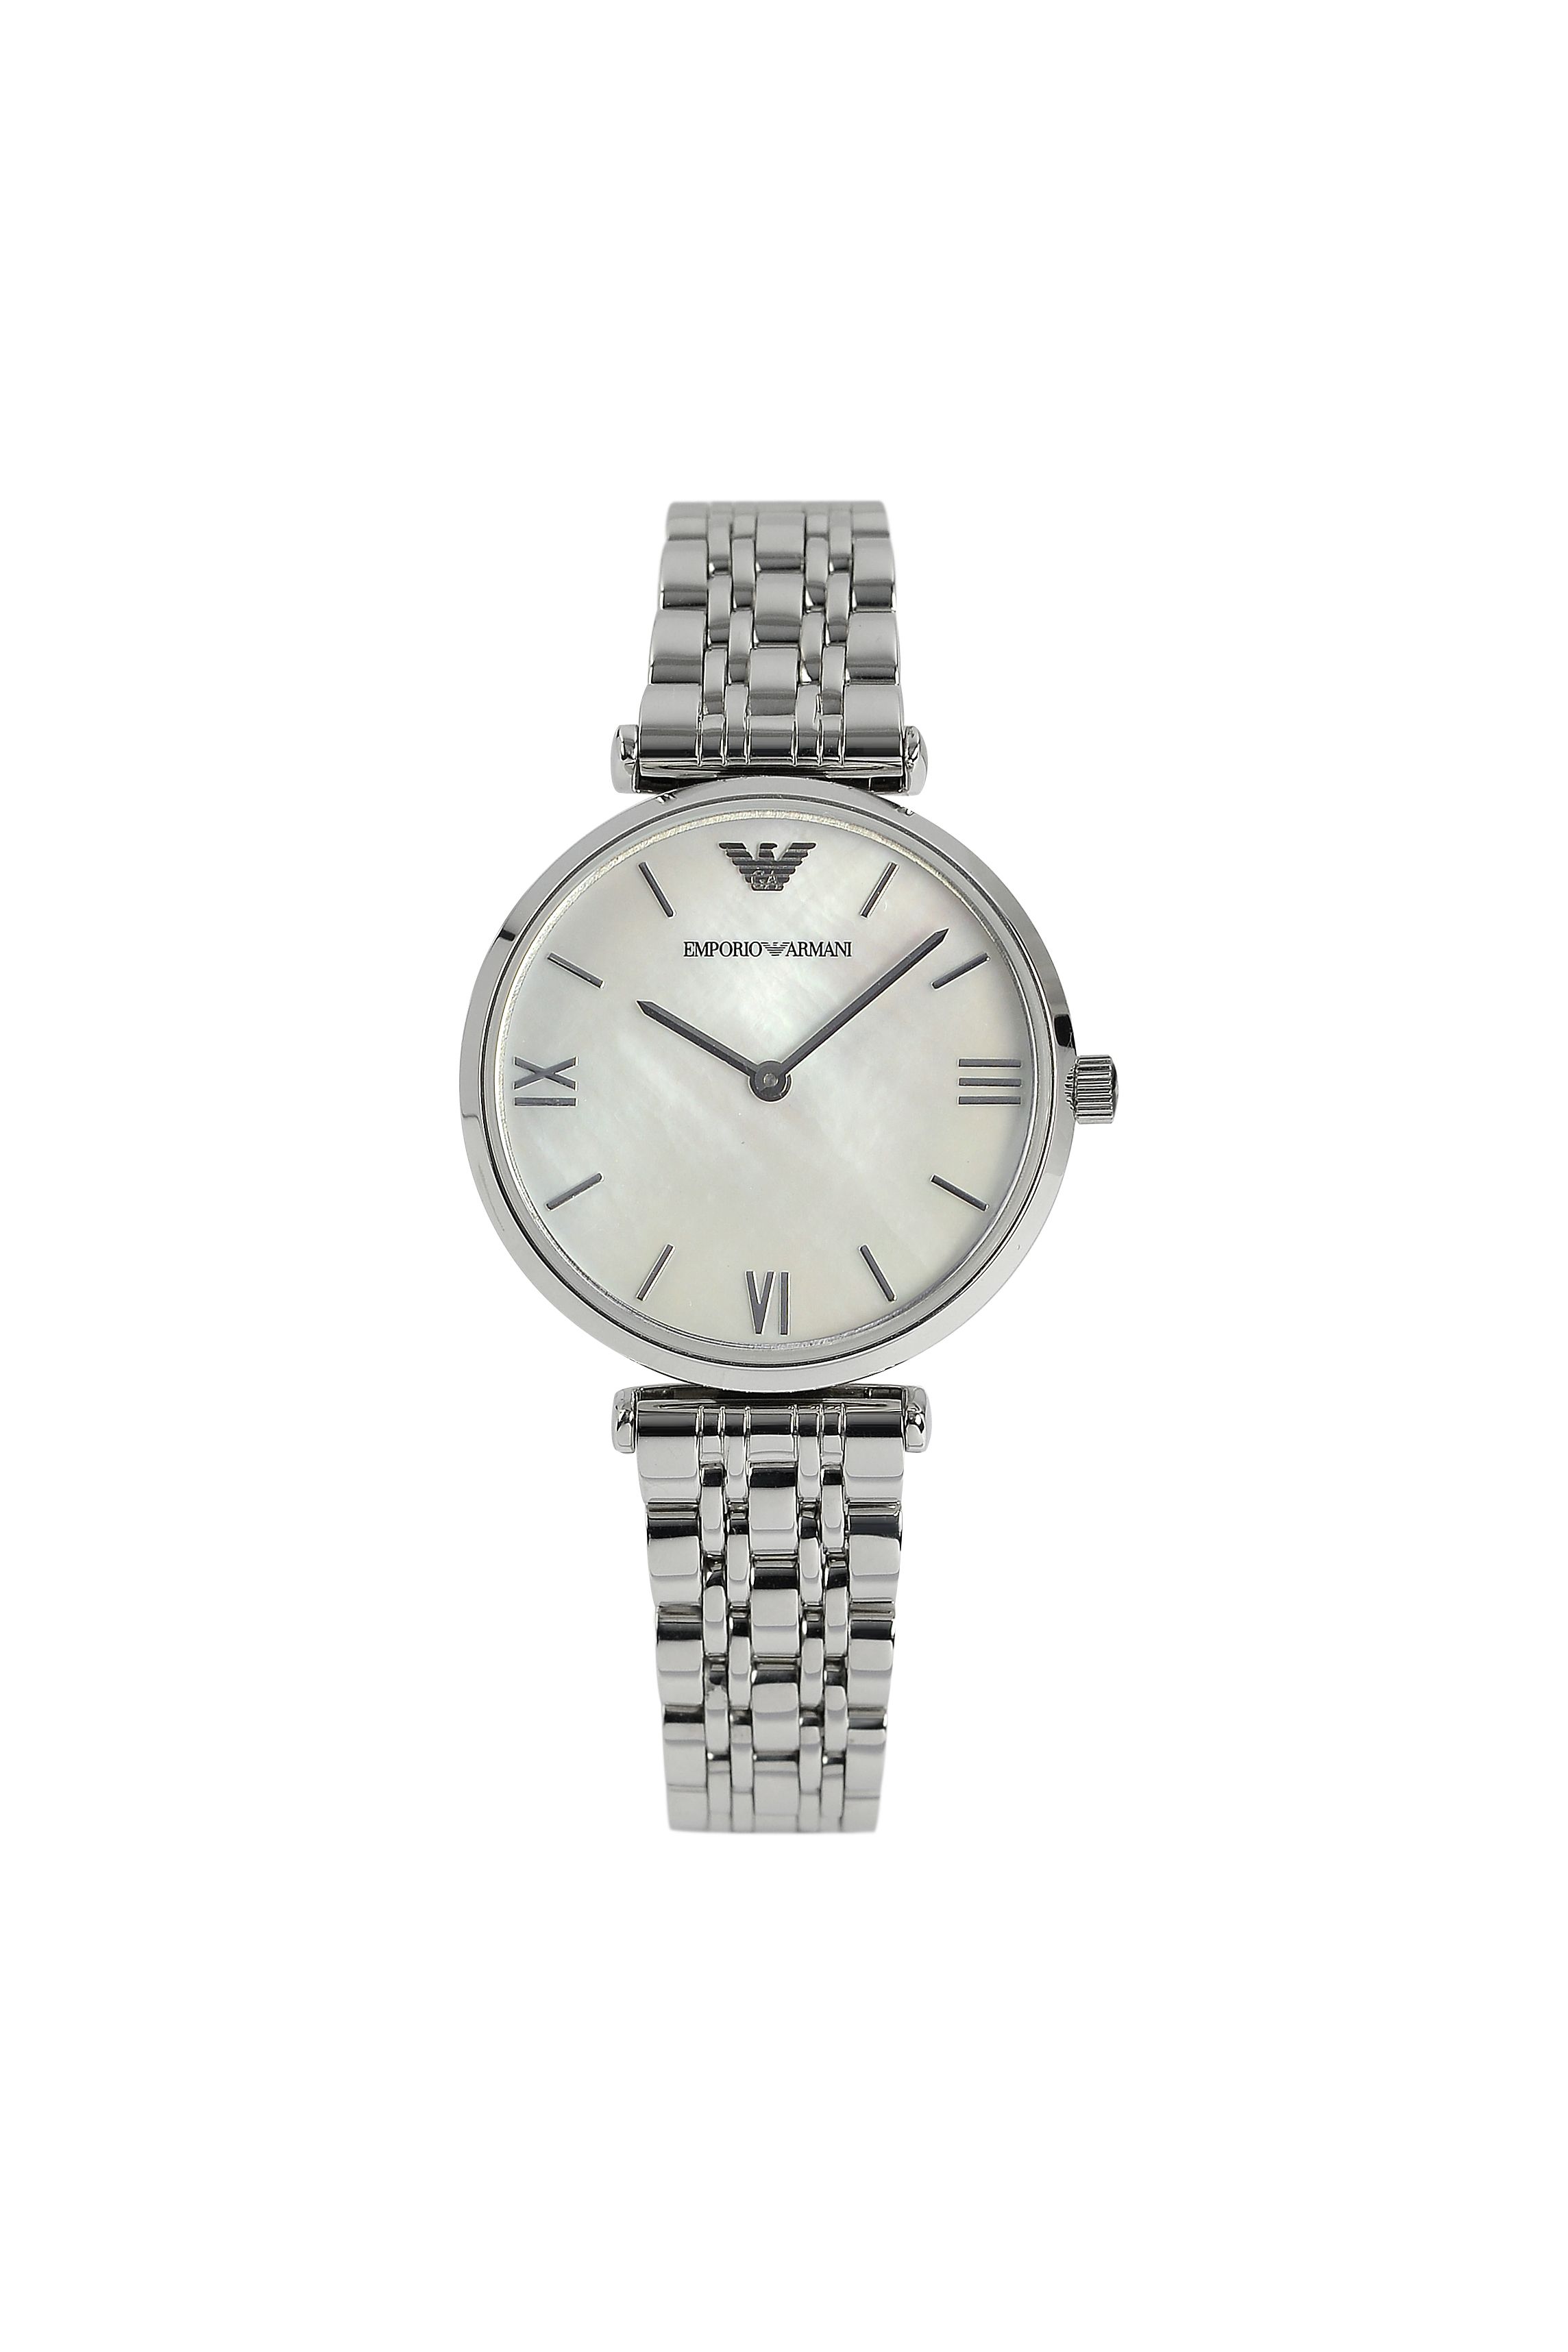 Emporio armani Ar1682 Retro Silver Ladies Bracelet Watch in Metallic | Lyst